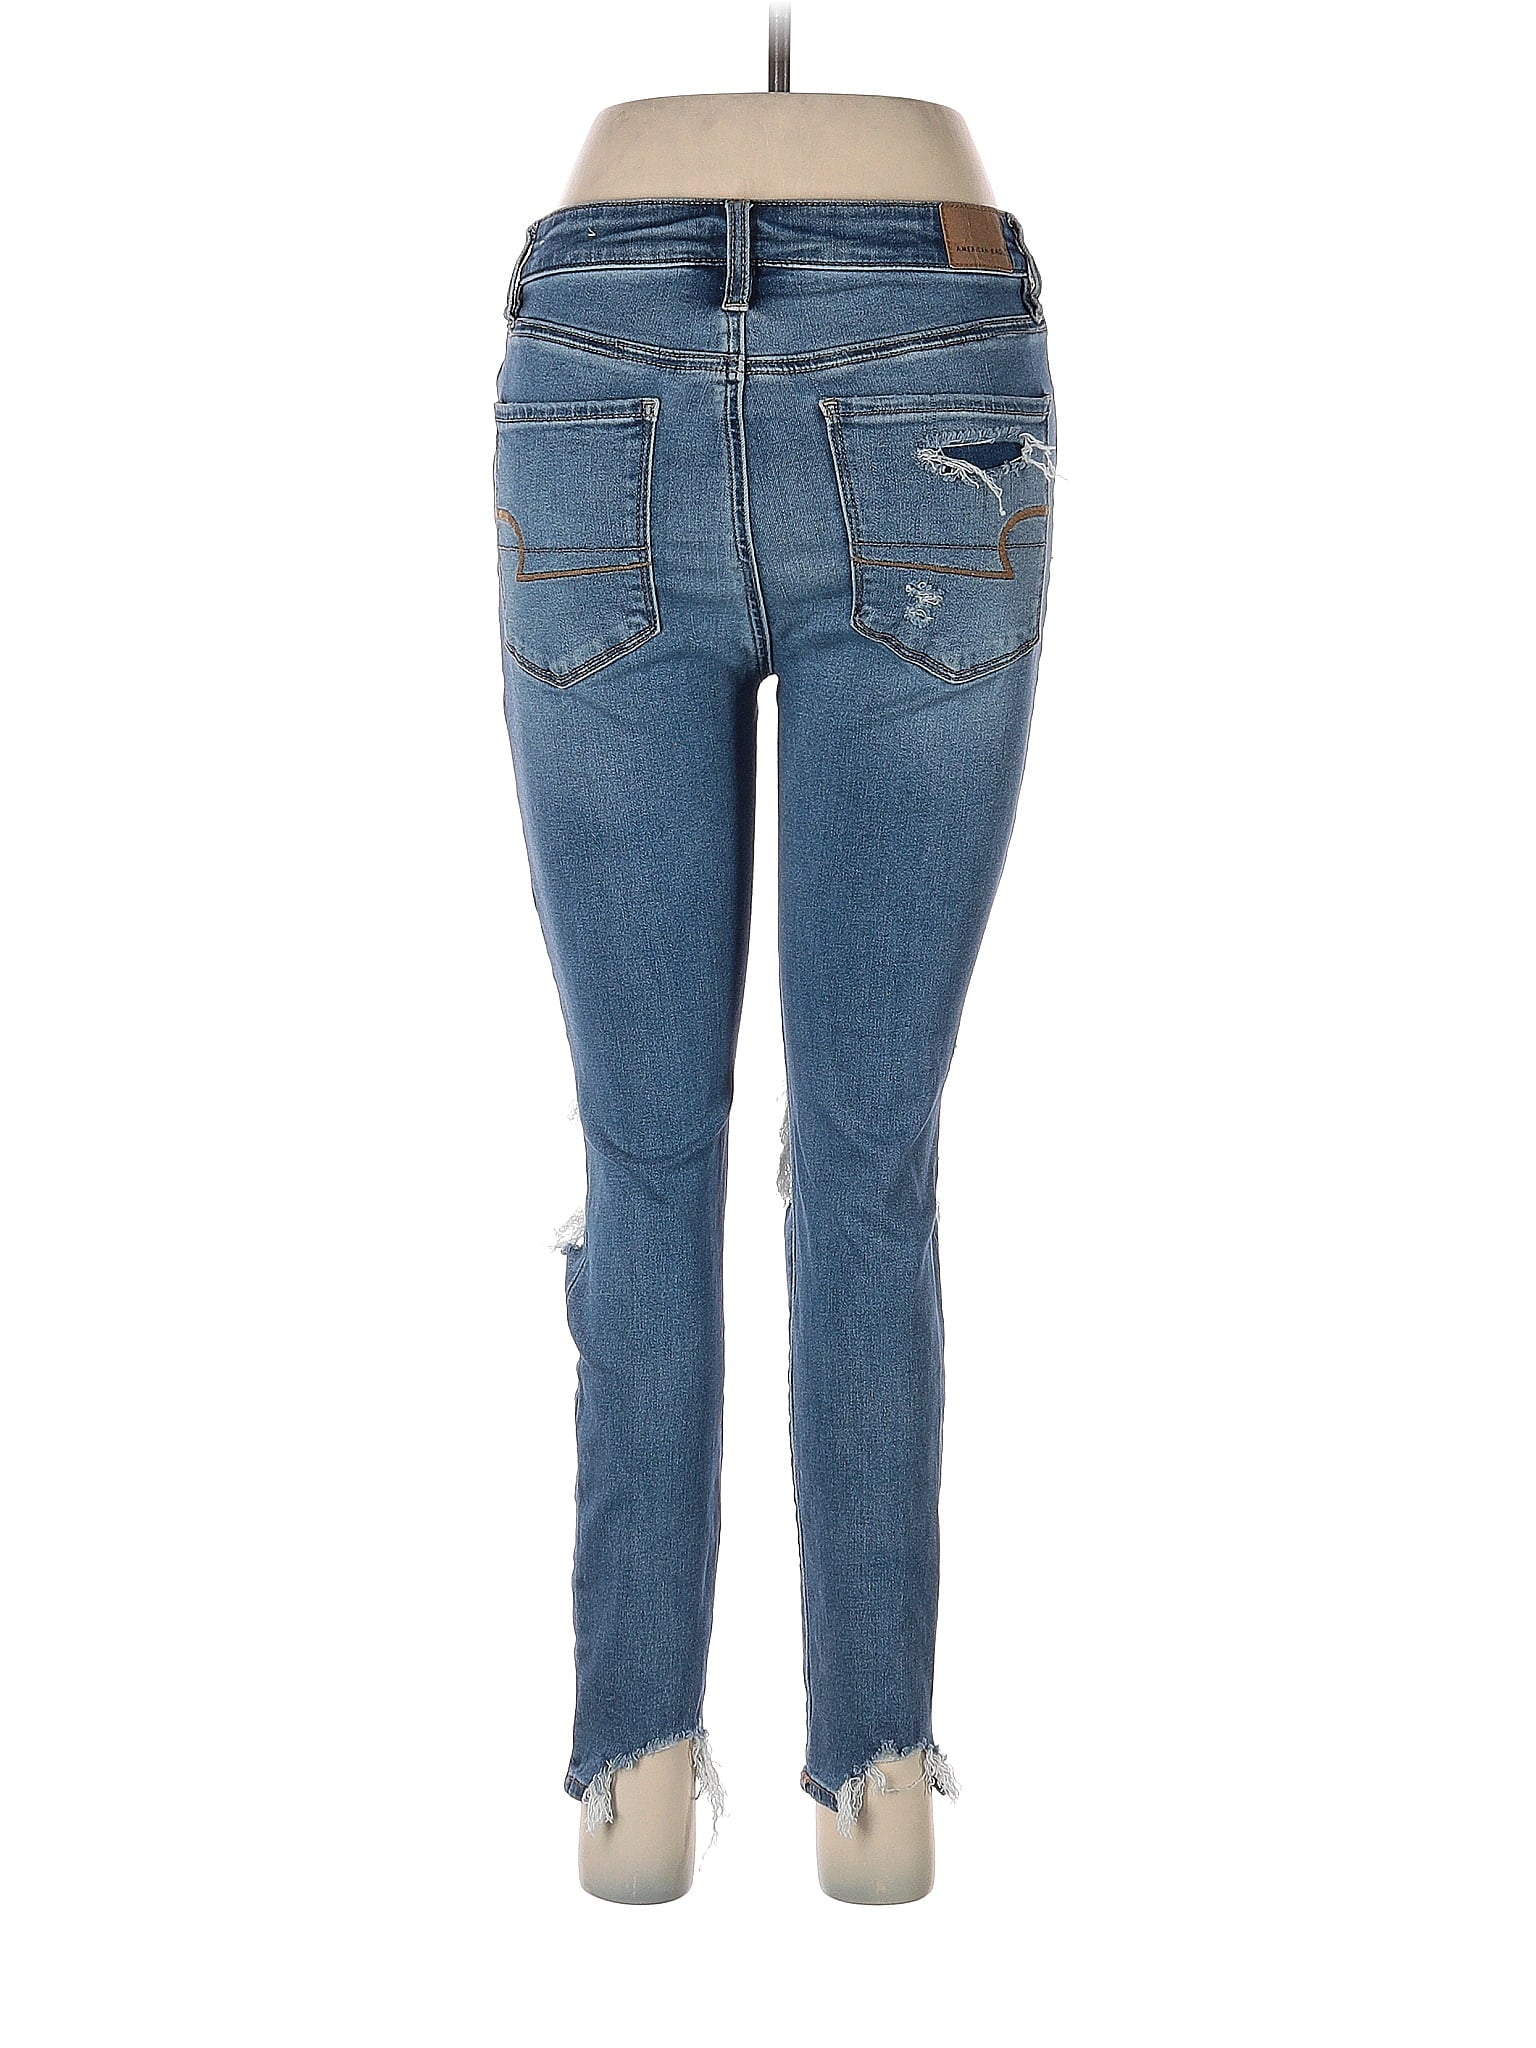 Jeans size - 8 P